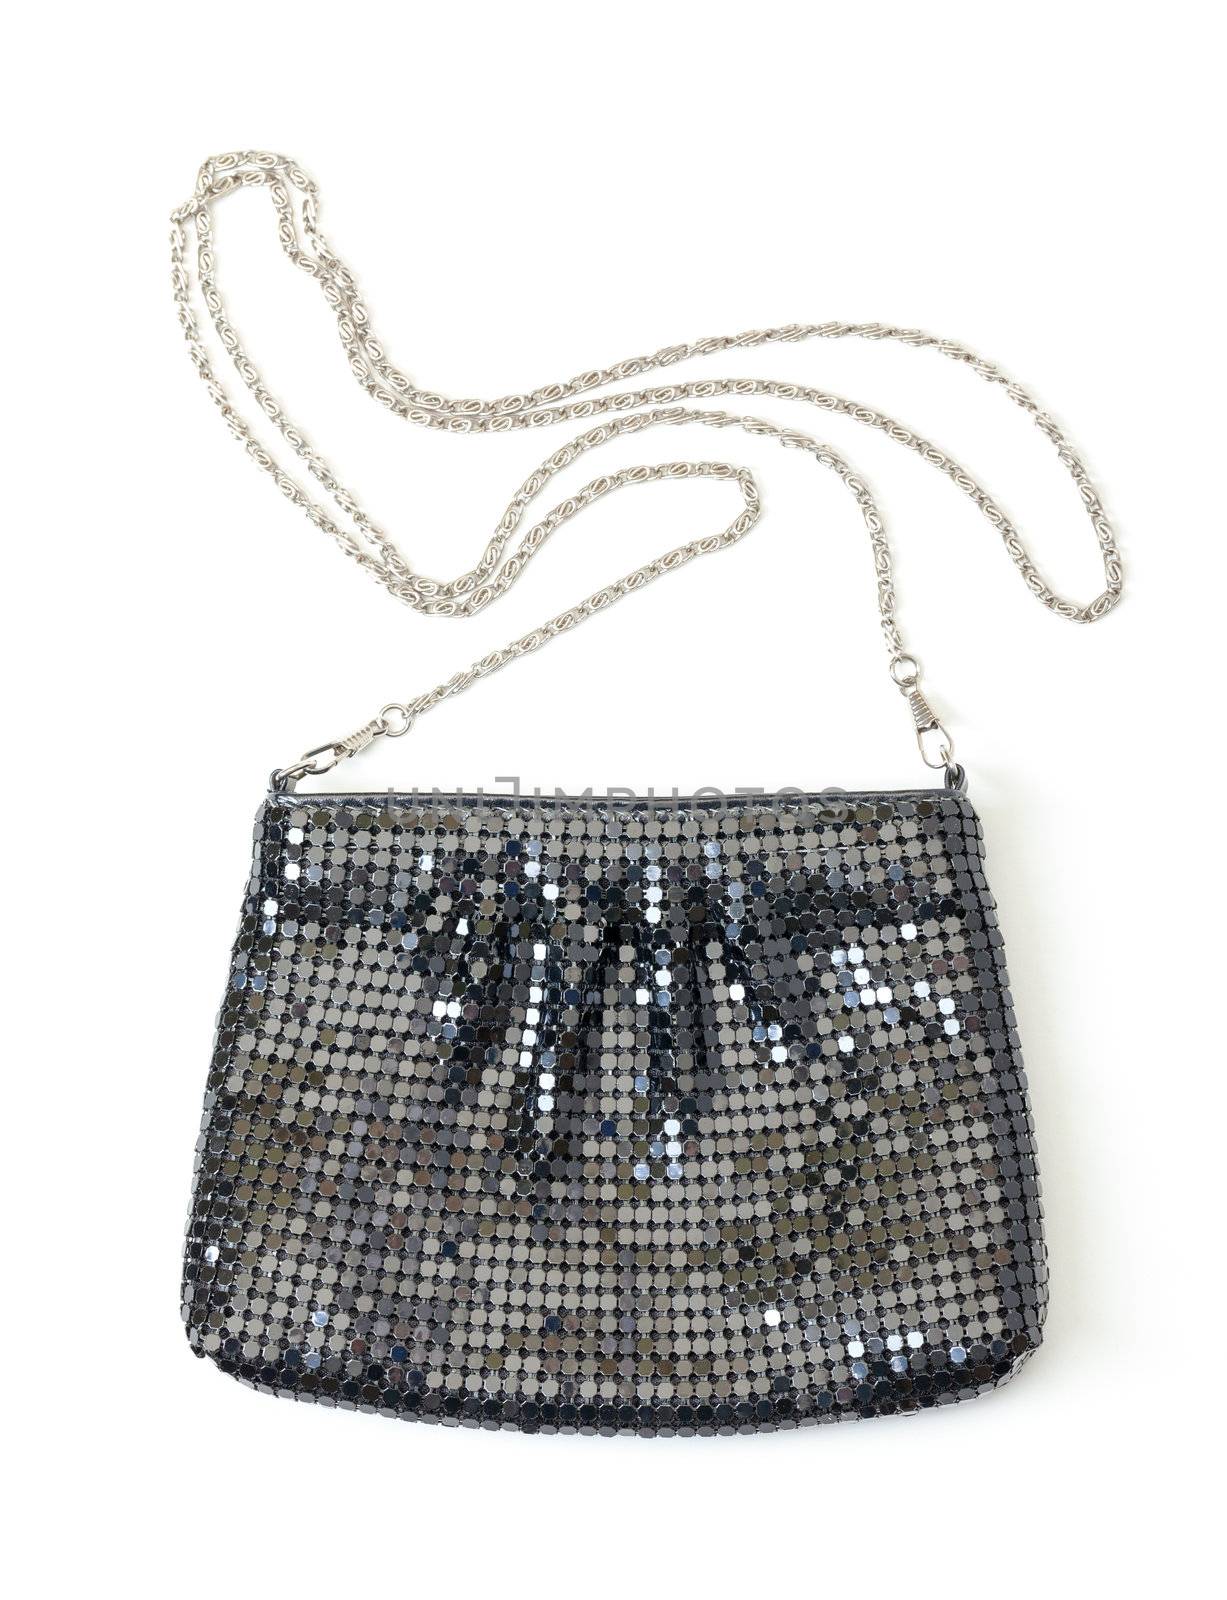 Classic black handbag with a silver chain strap on a white studio background